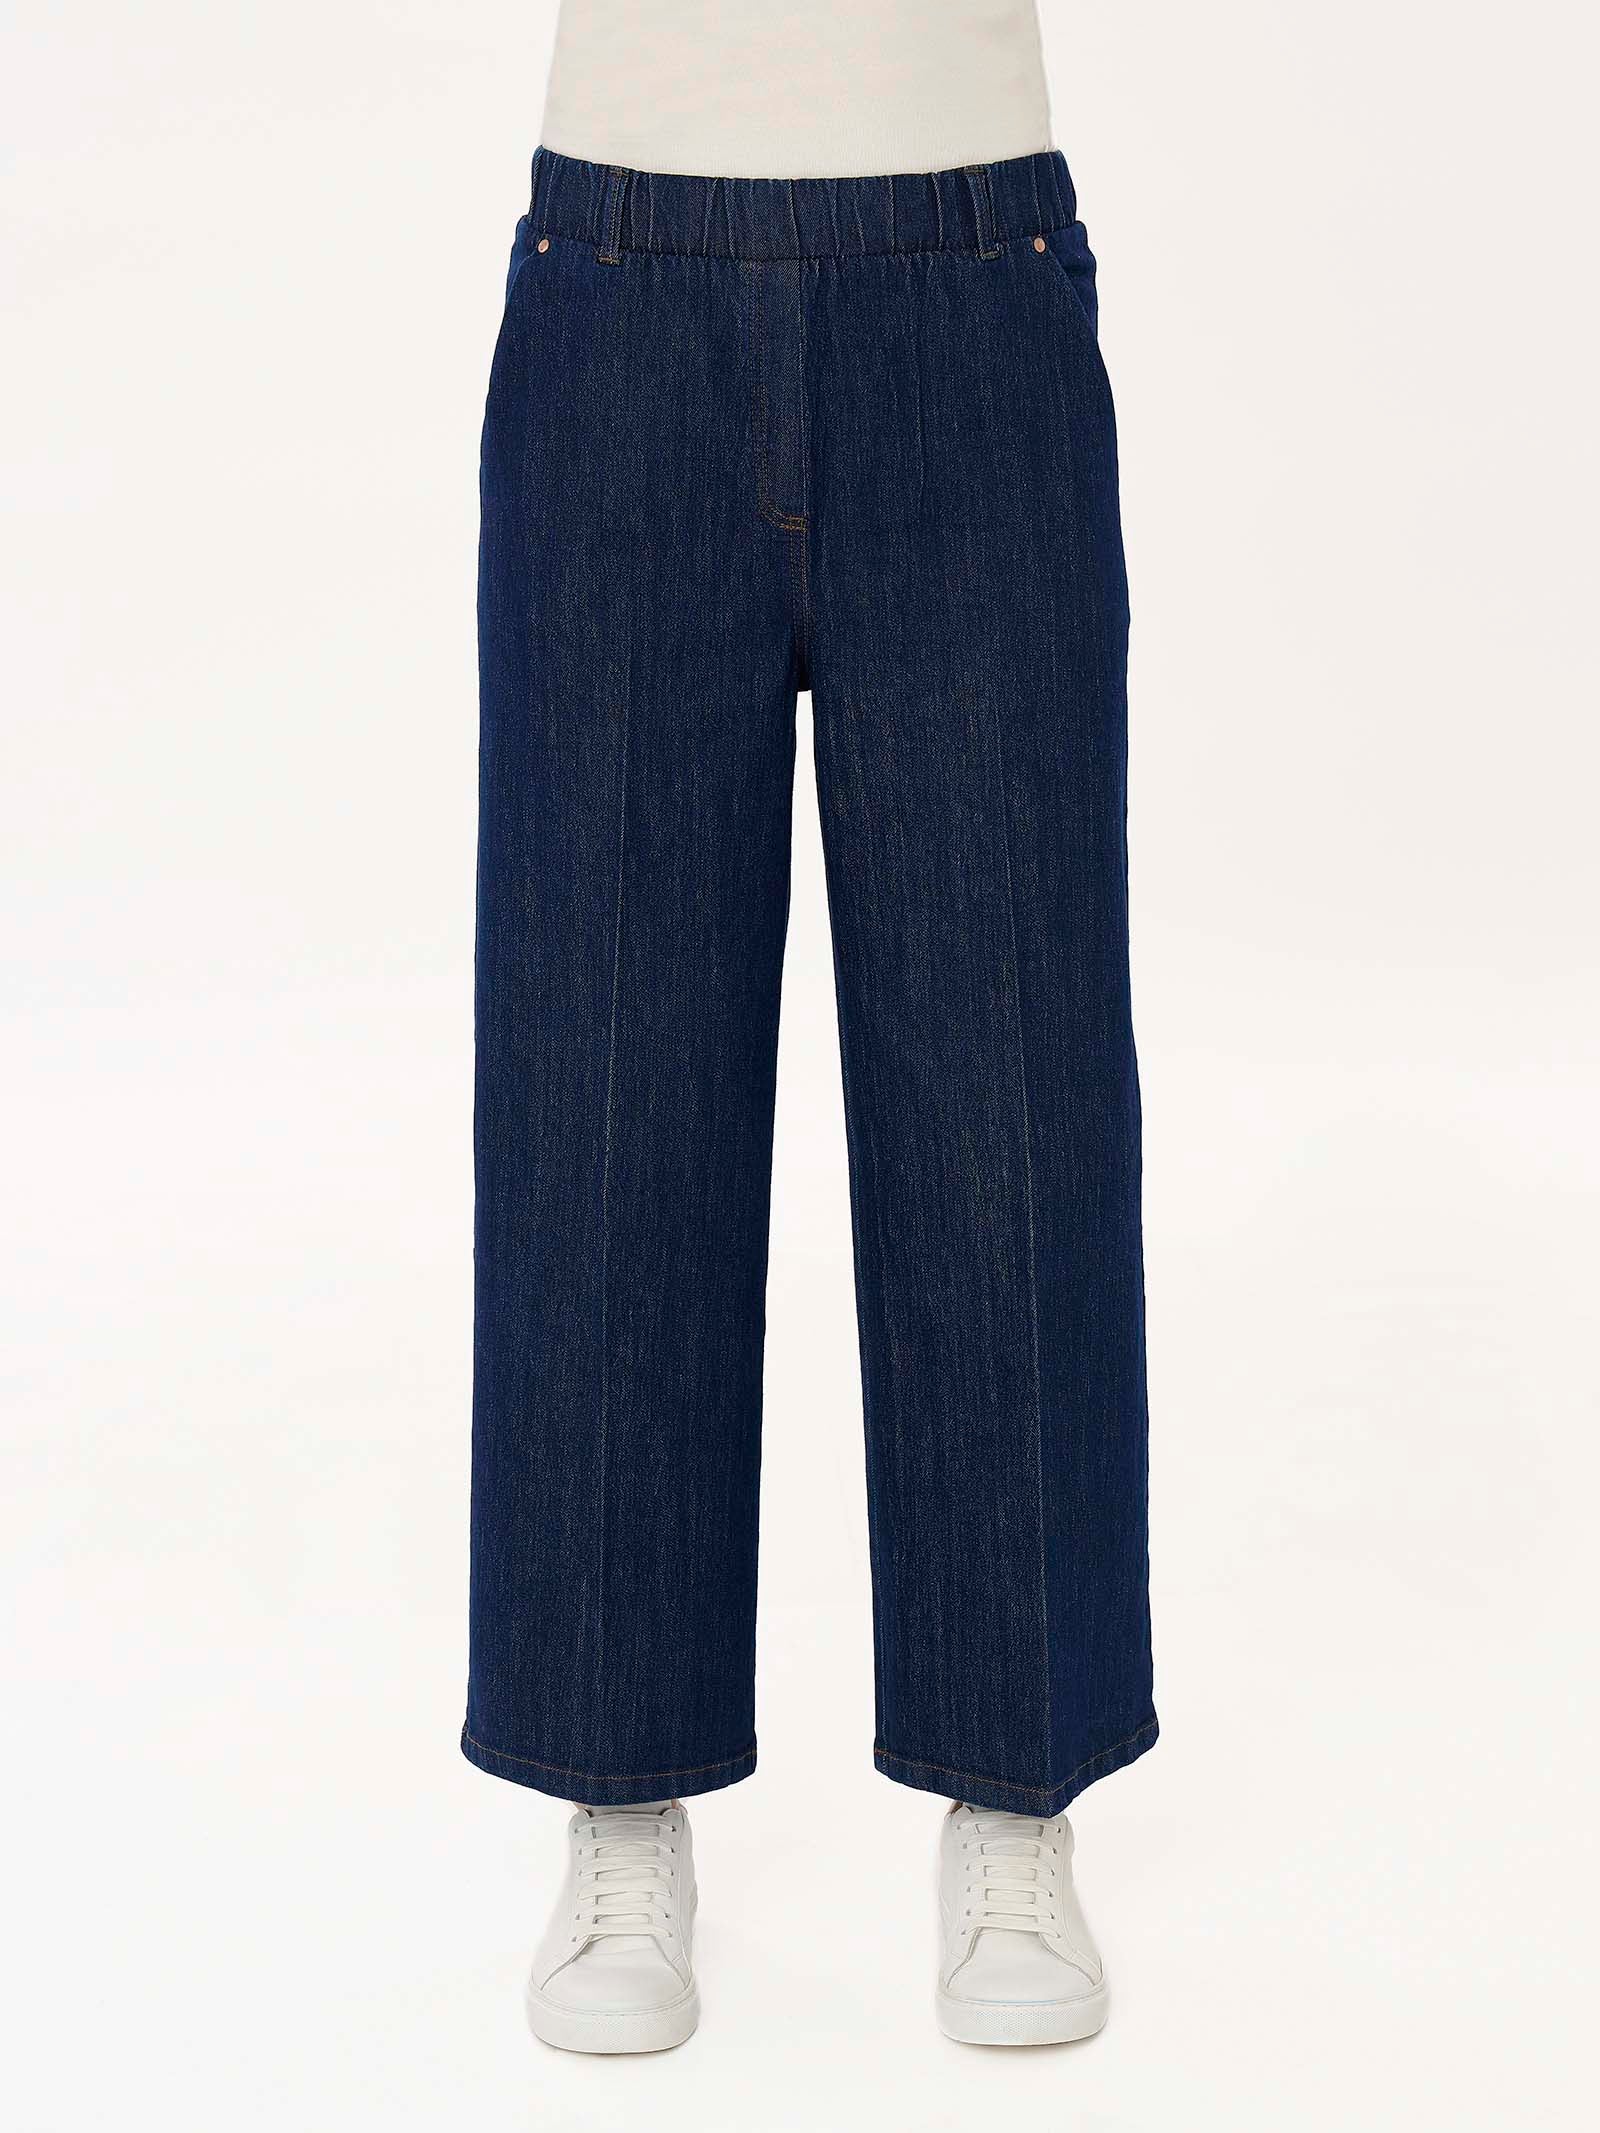 Jeans Cropped in tessuto 4 Seasons Denim  -  - Ragno